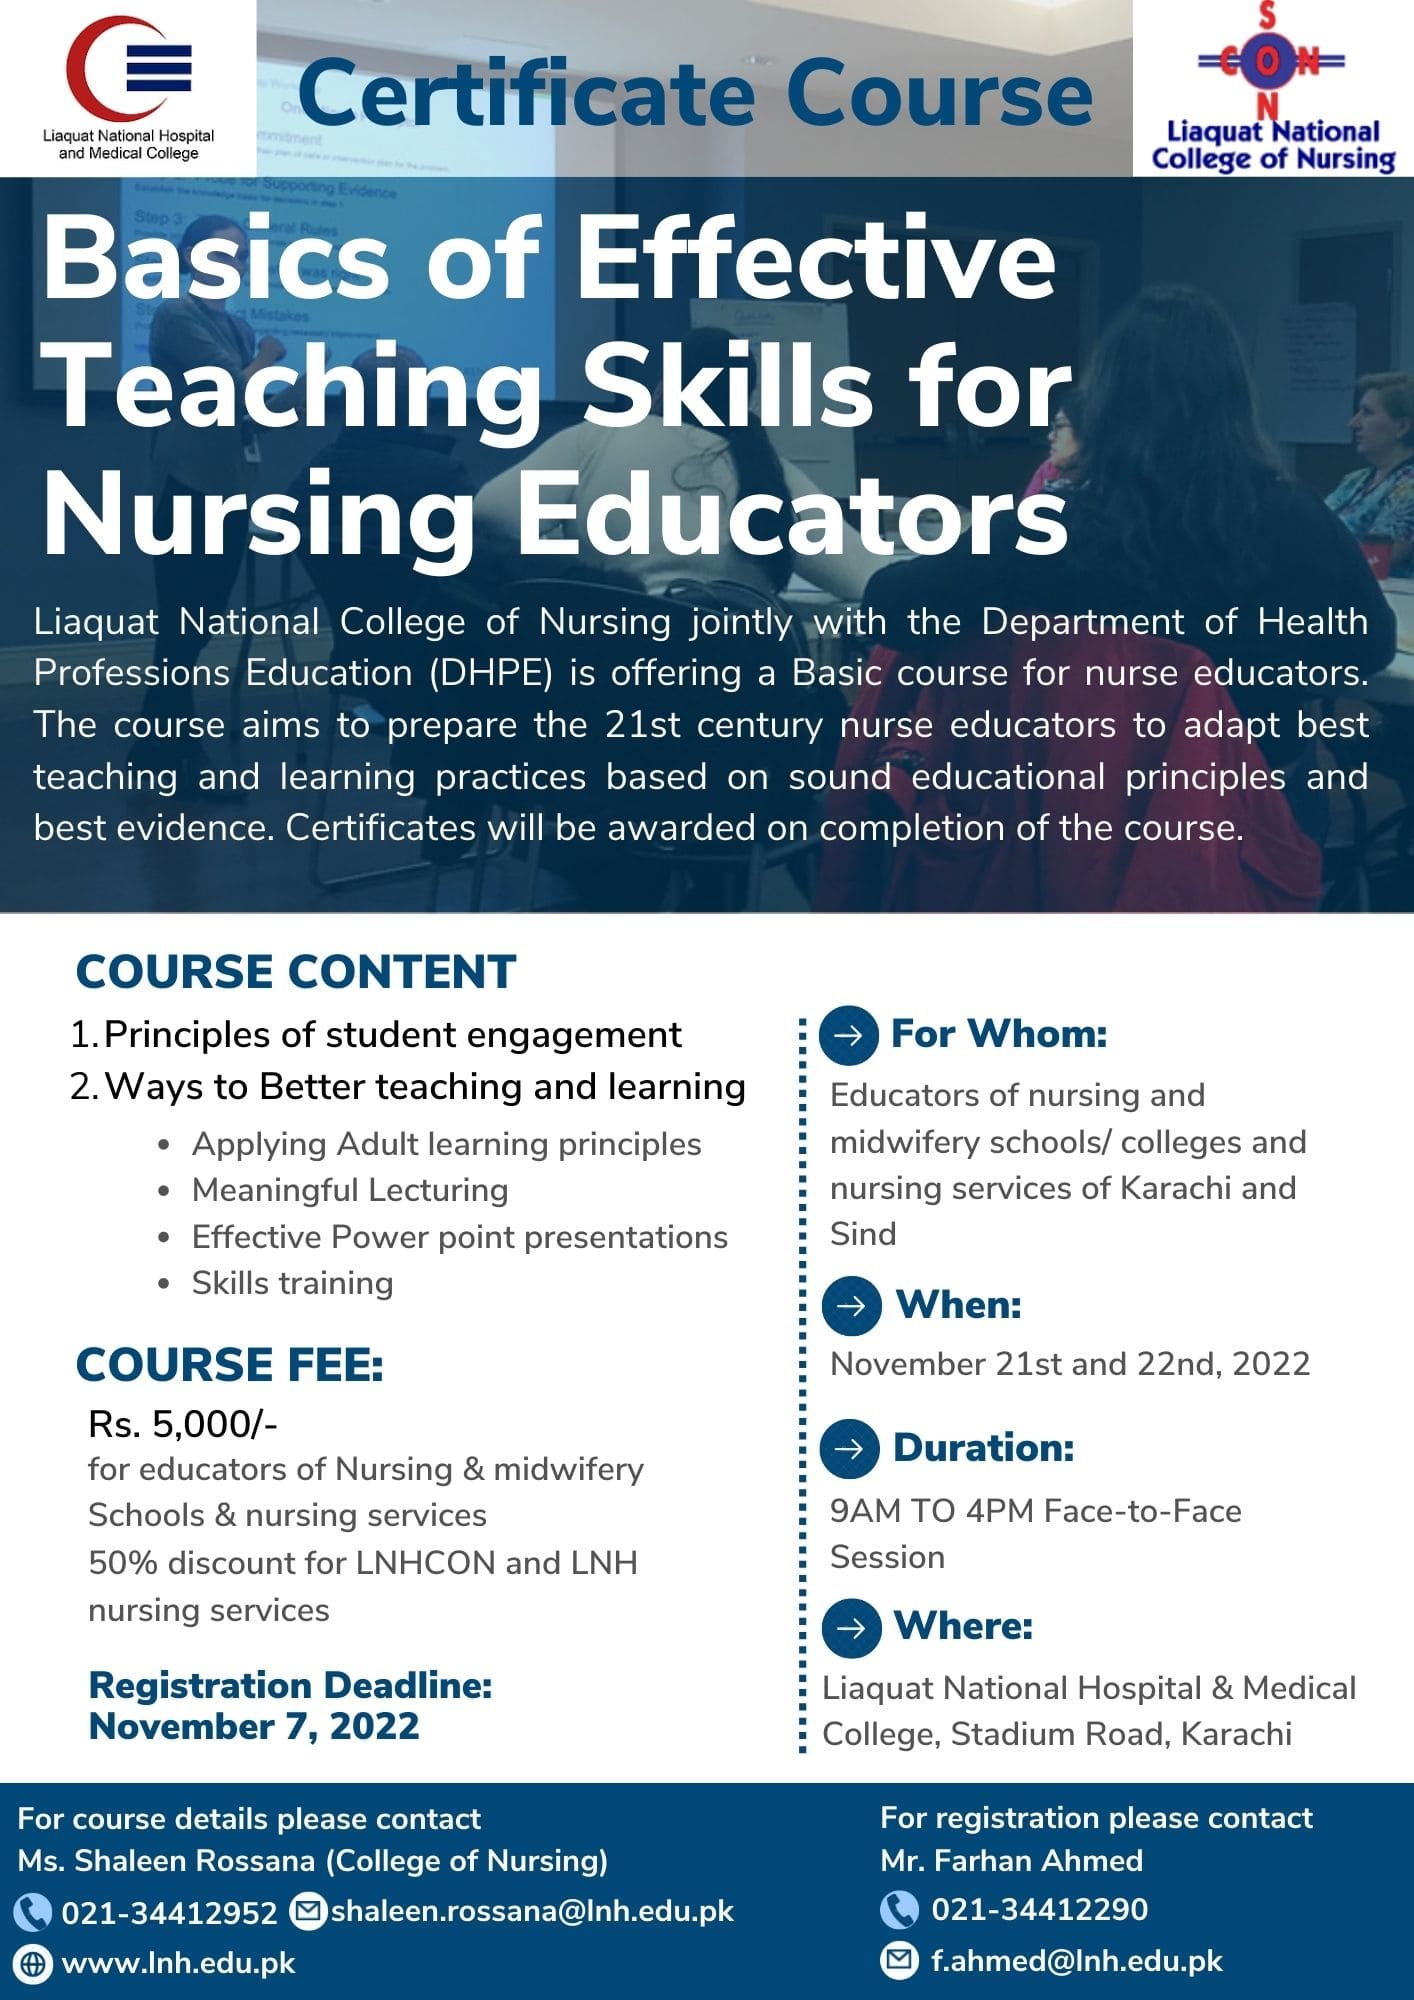 Certificate Course on Basics of Effective Teaching Skills for Nursing Educators, Nov 21 & 22, 2022